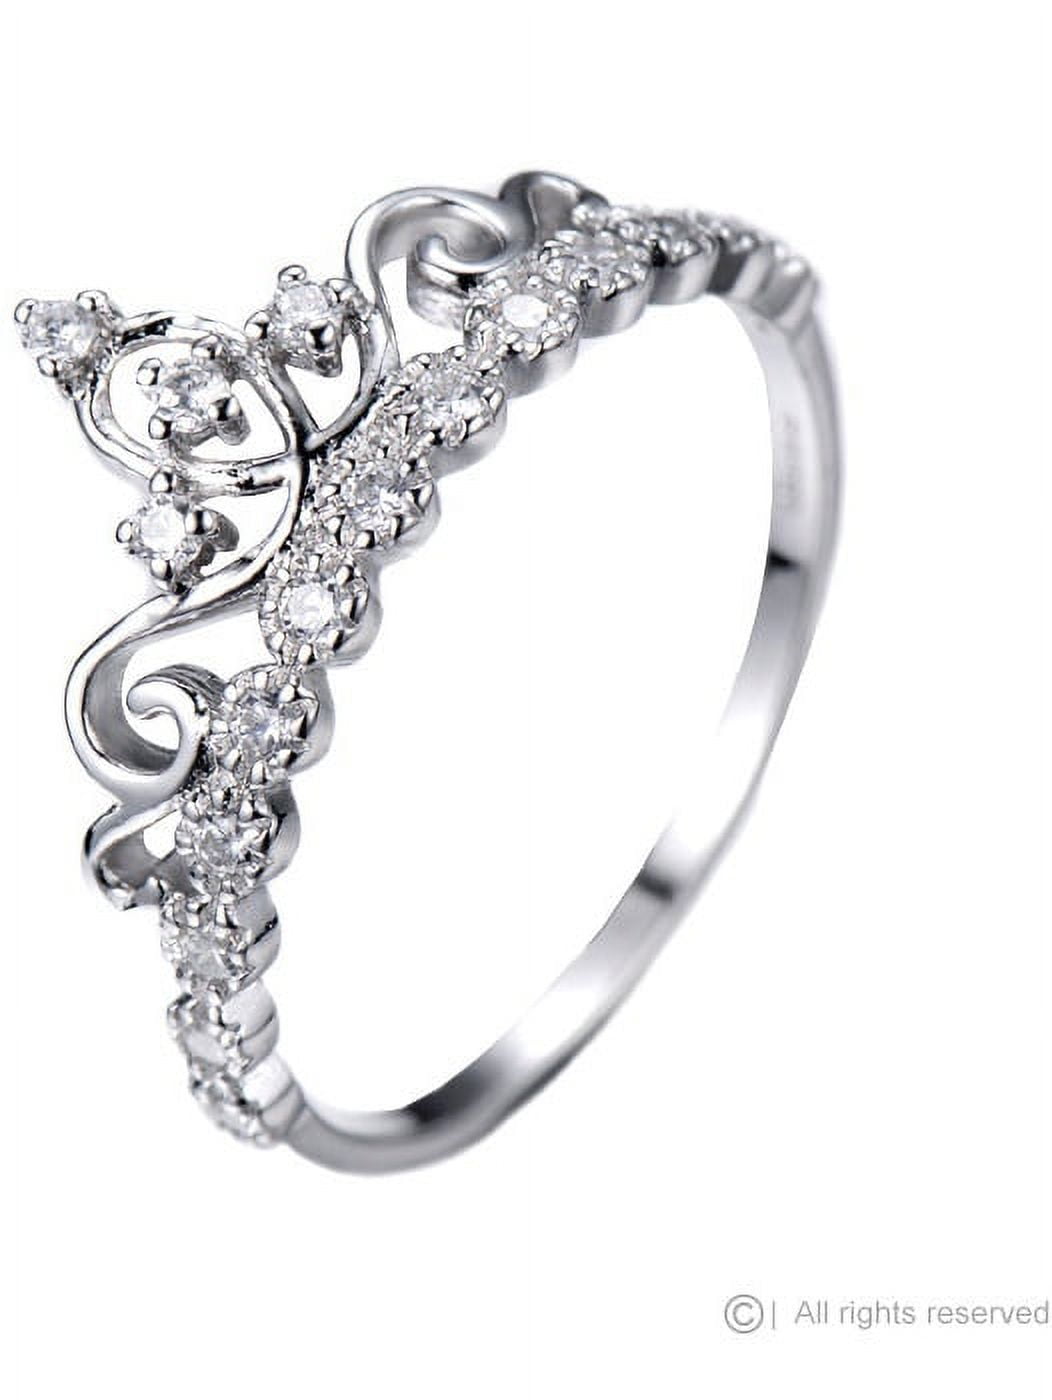 Fairy Princess Ring - 3 Rexes Jewelry